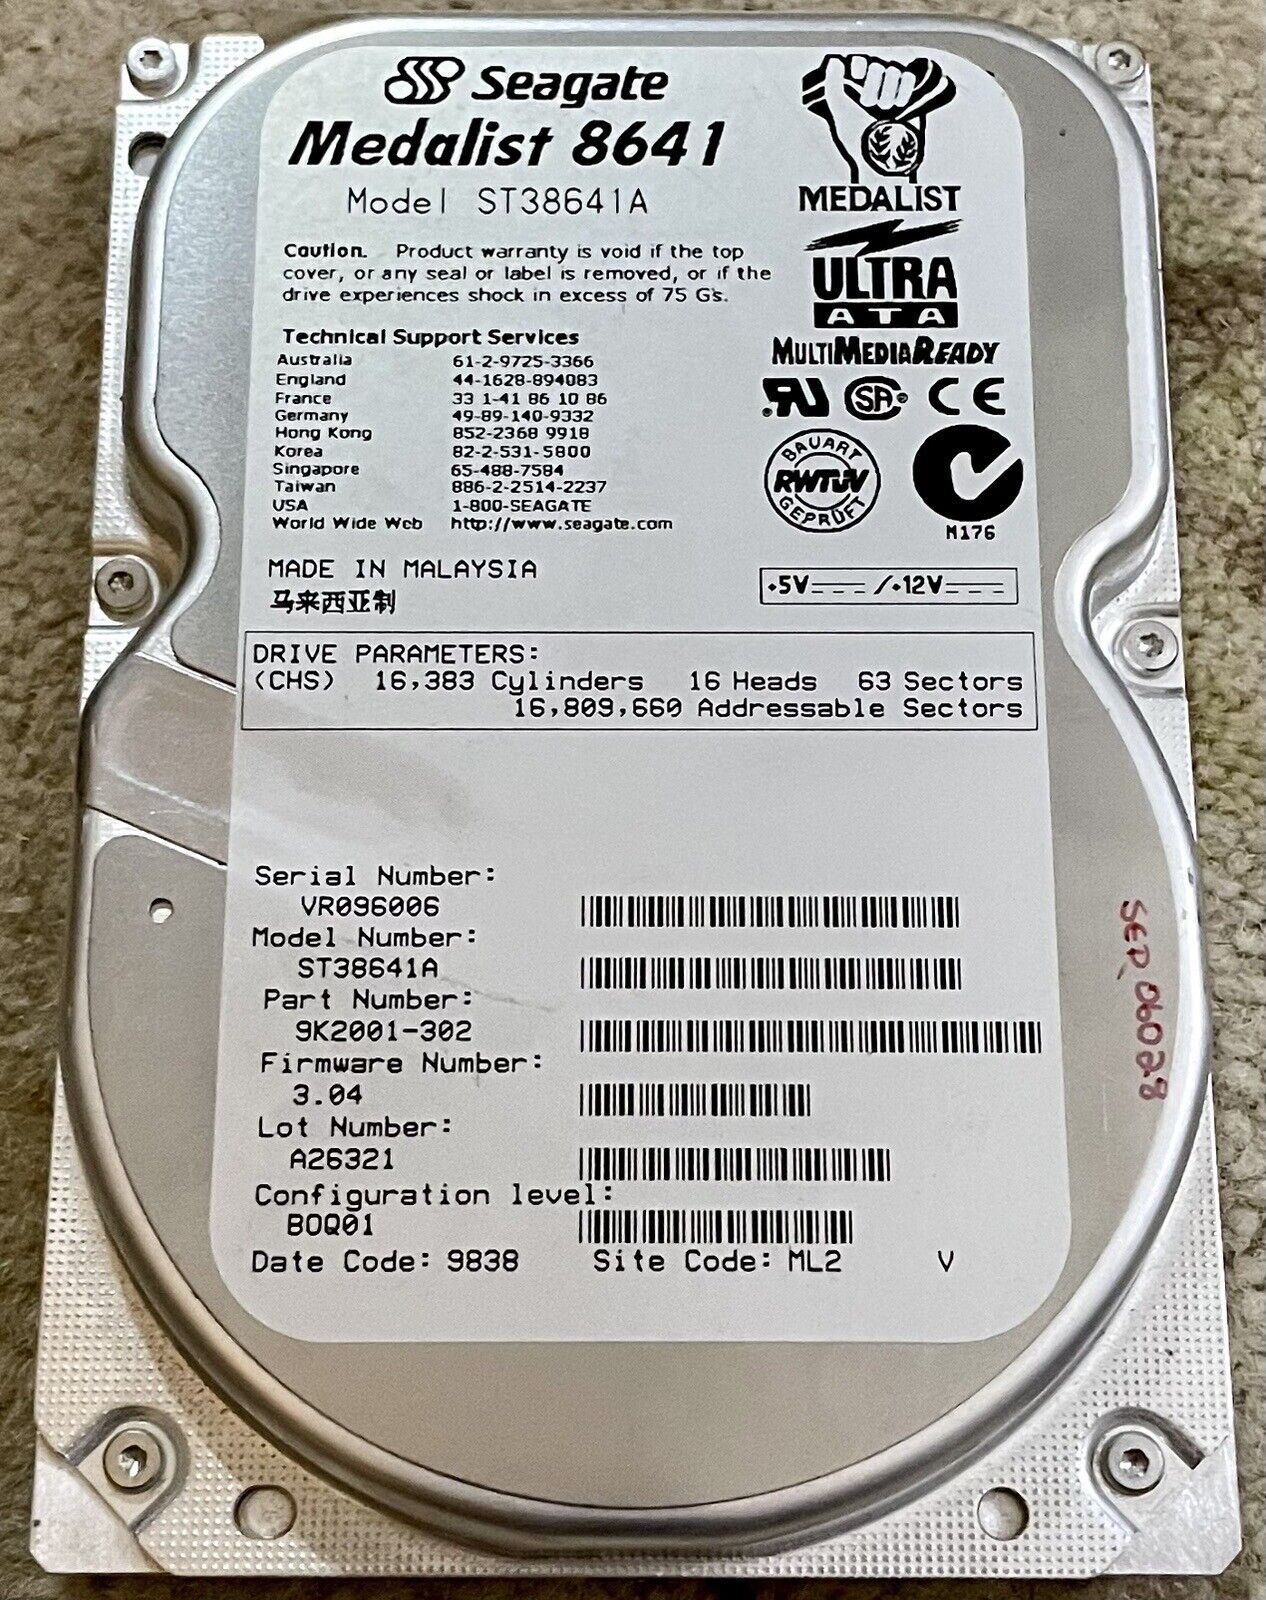 Seagate Medalist 8641 Model ST38641A 8.4GB 5400RPM Desktop Hard Drive HDD ATA